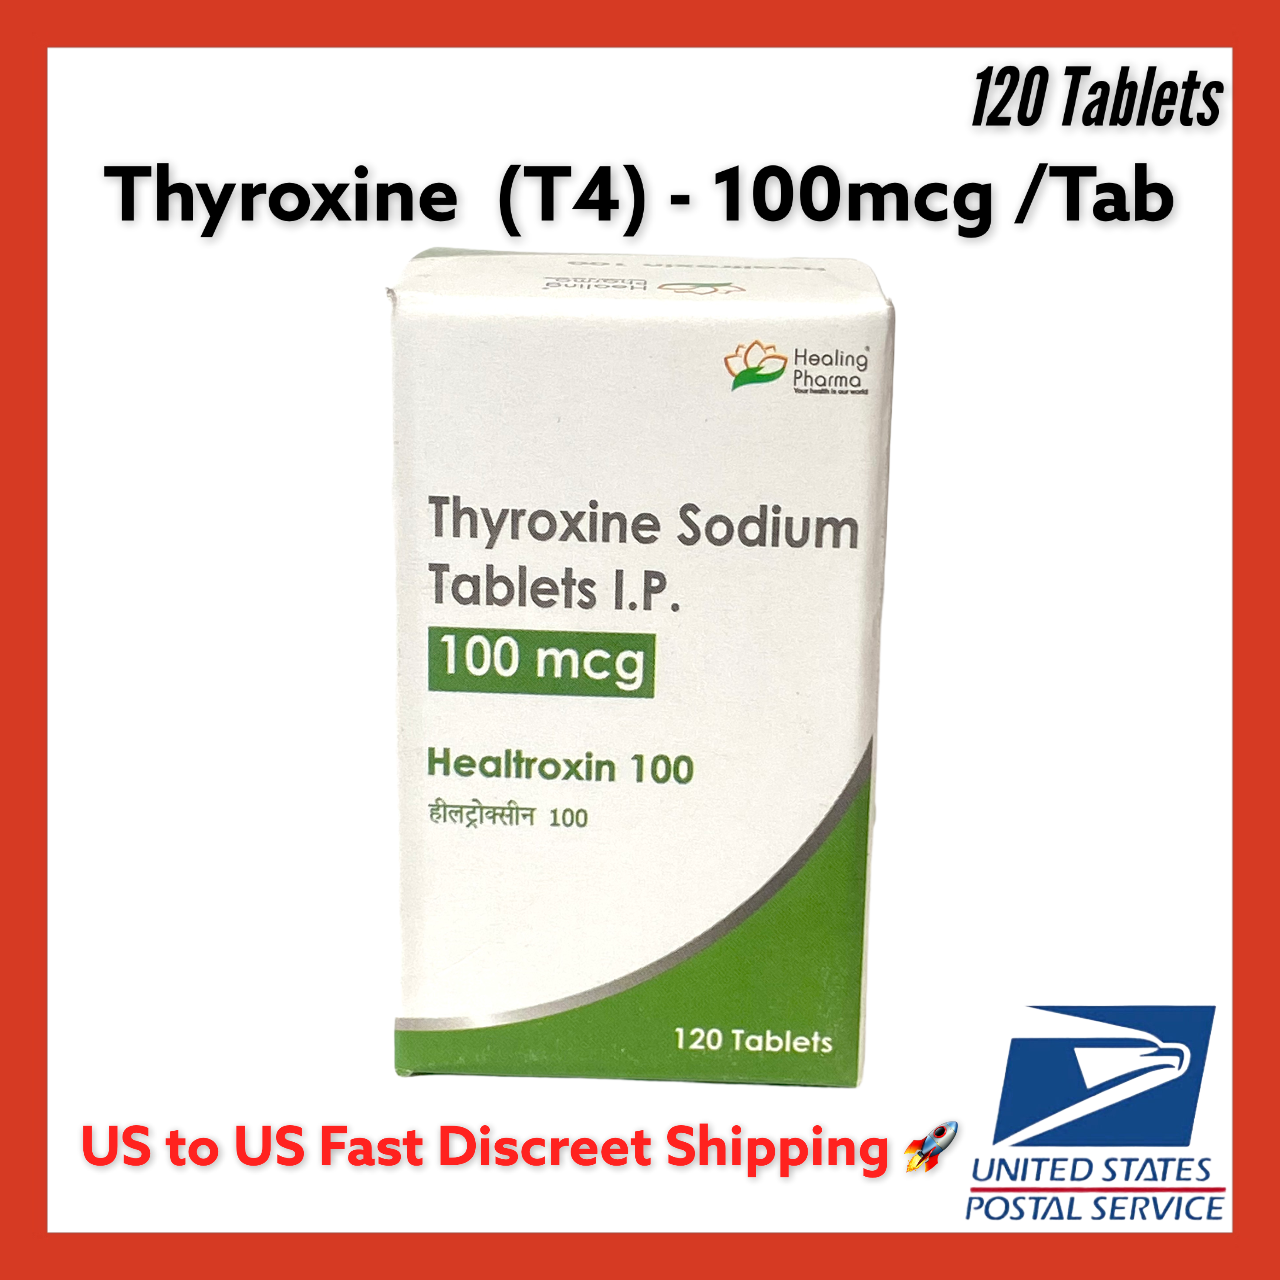 T4 (Thyroxine SODIUM) - 100mcg